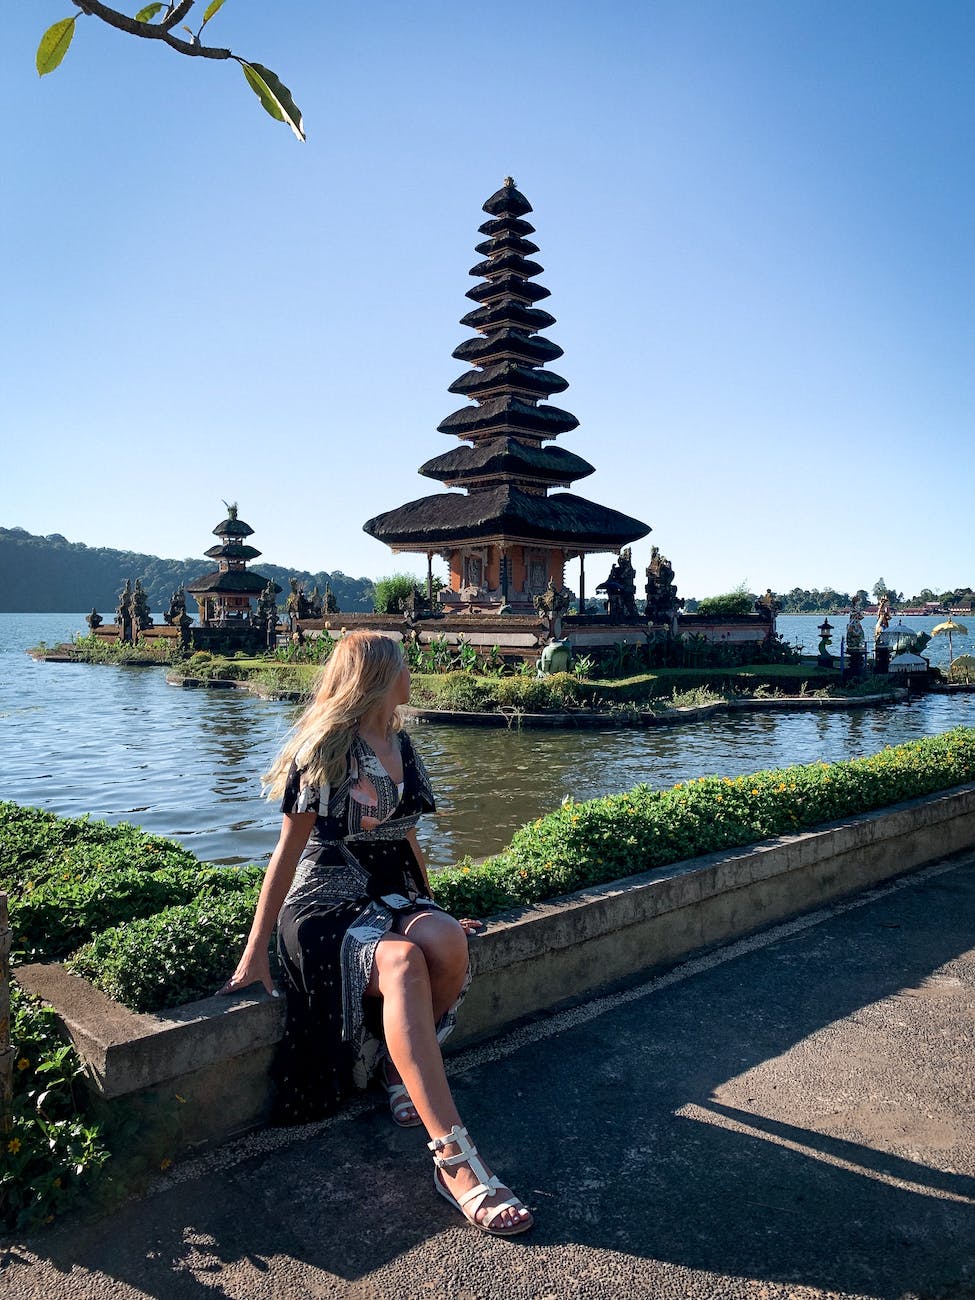 photo of woman sitting near plants looking at pagoda